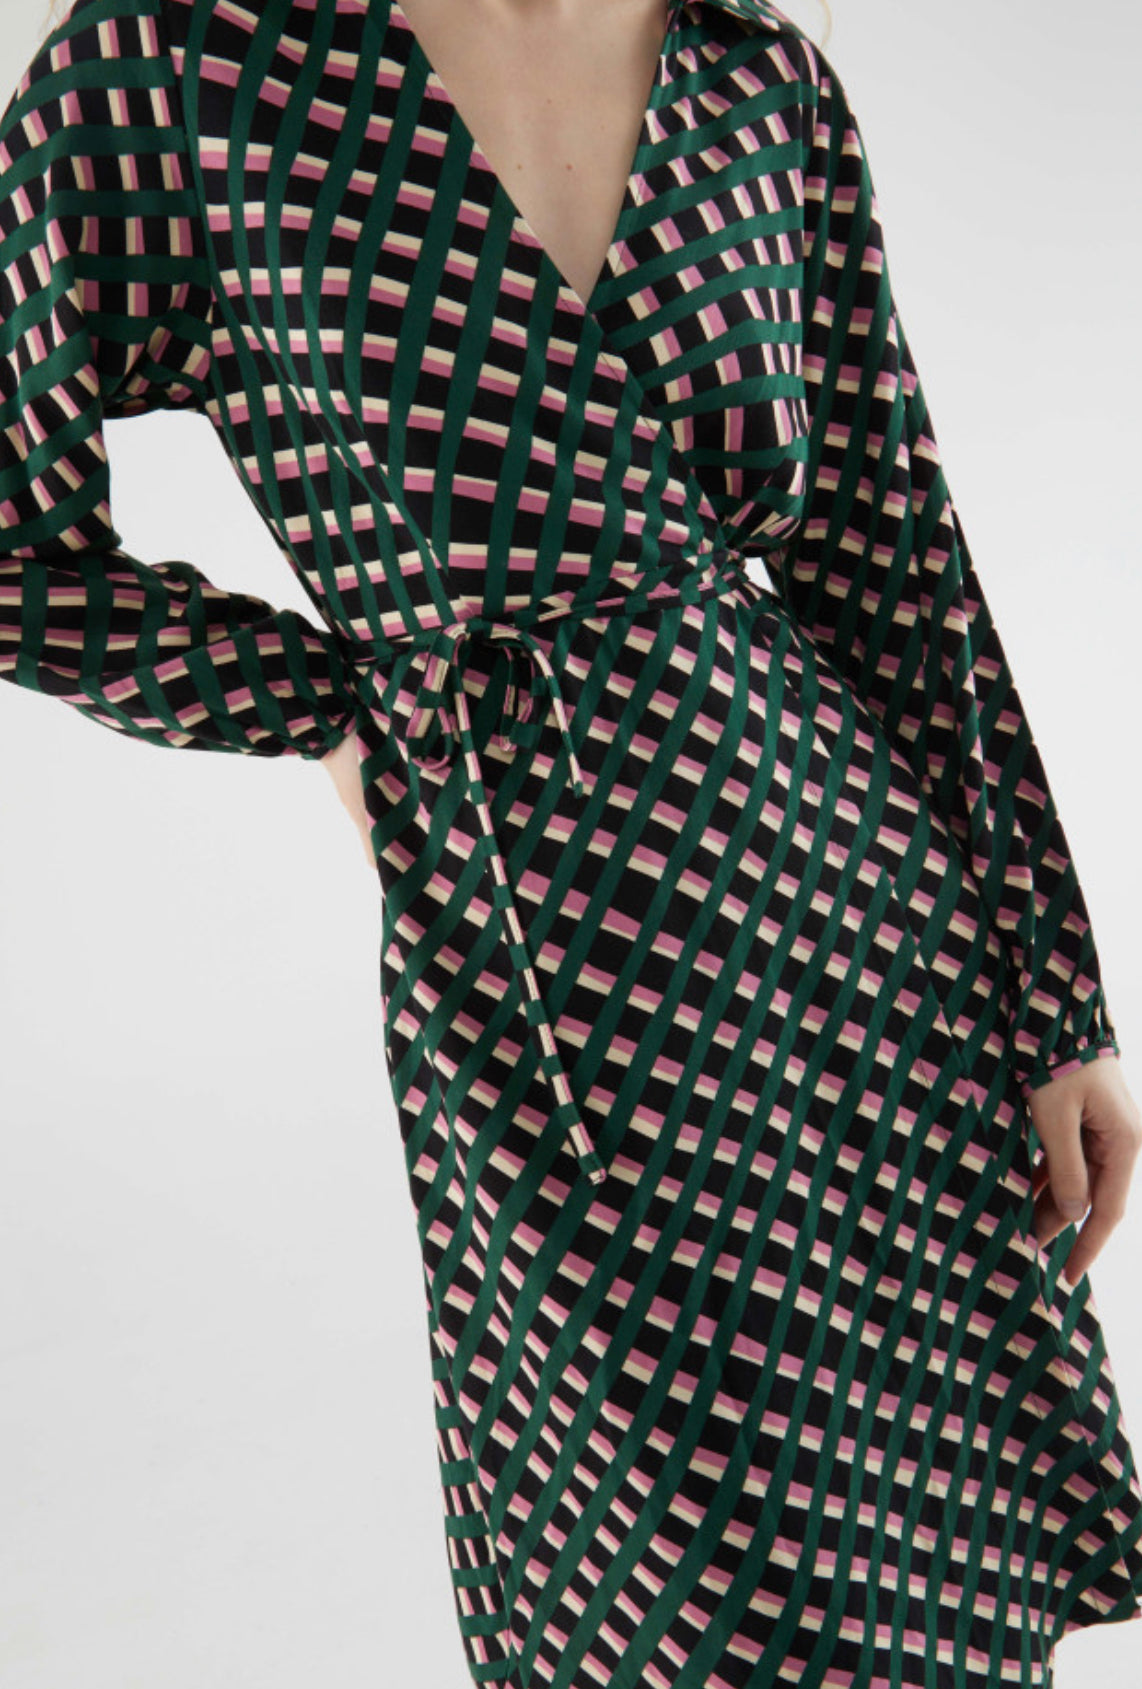 Midi dress with geometric print and a crossed design